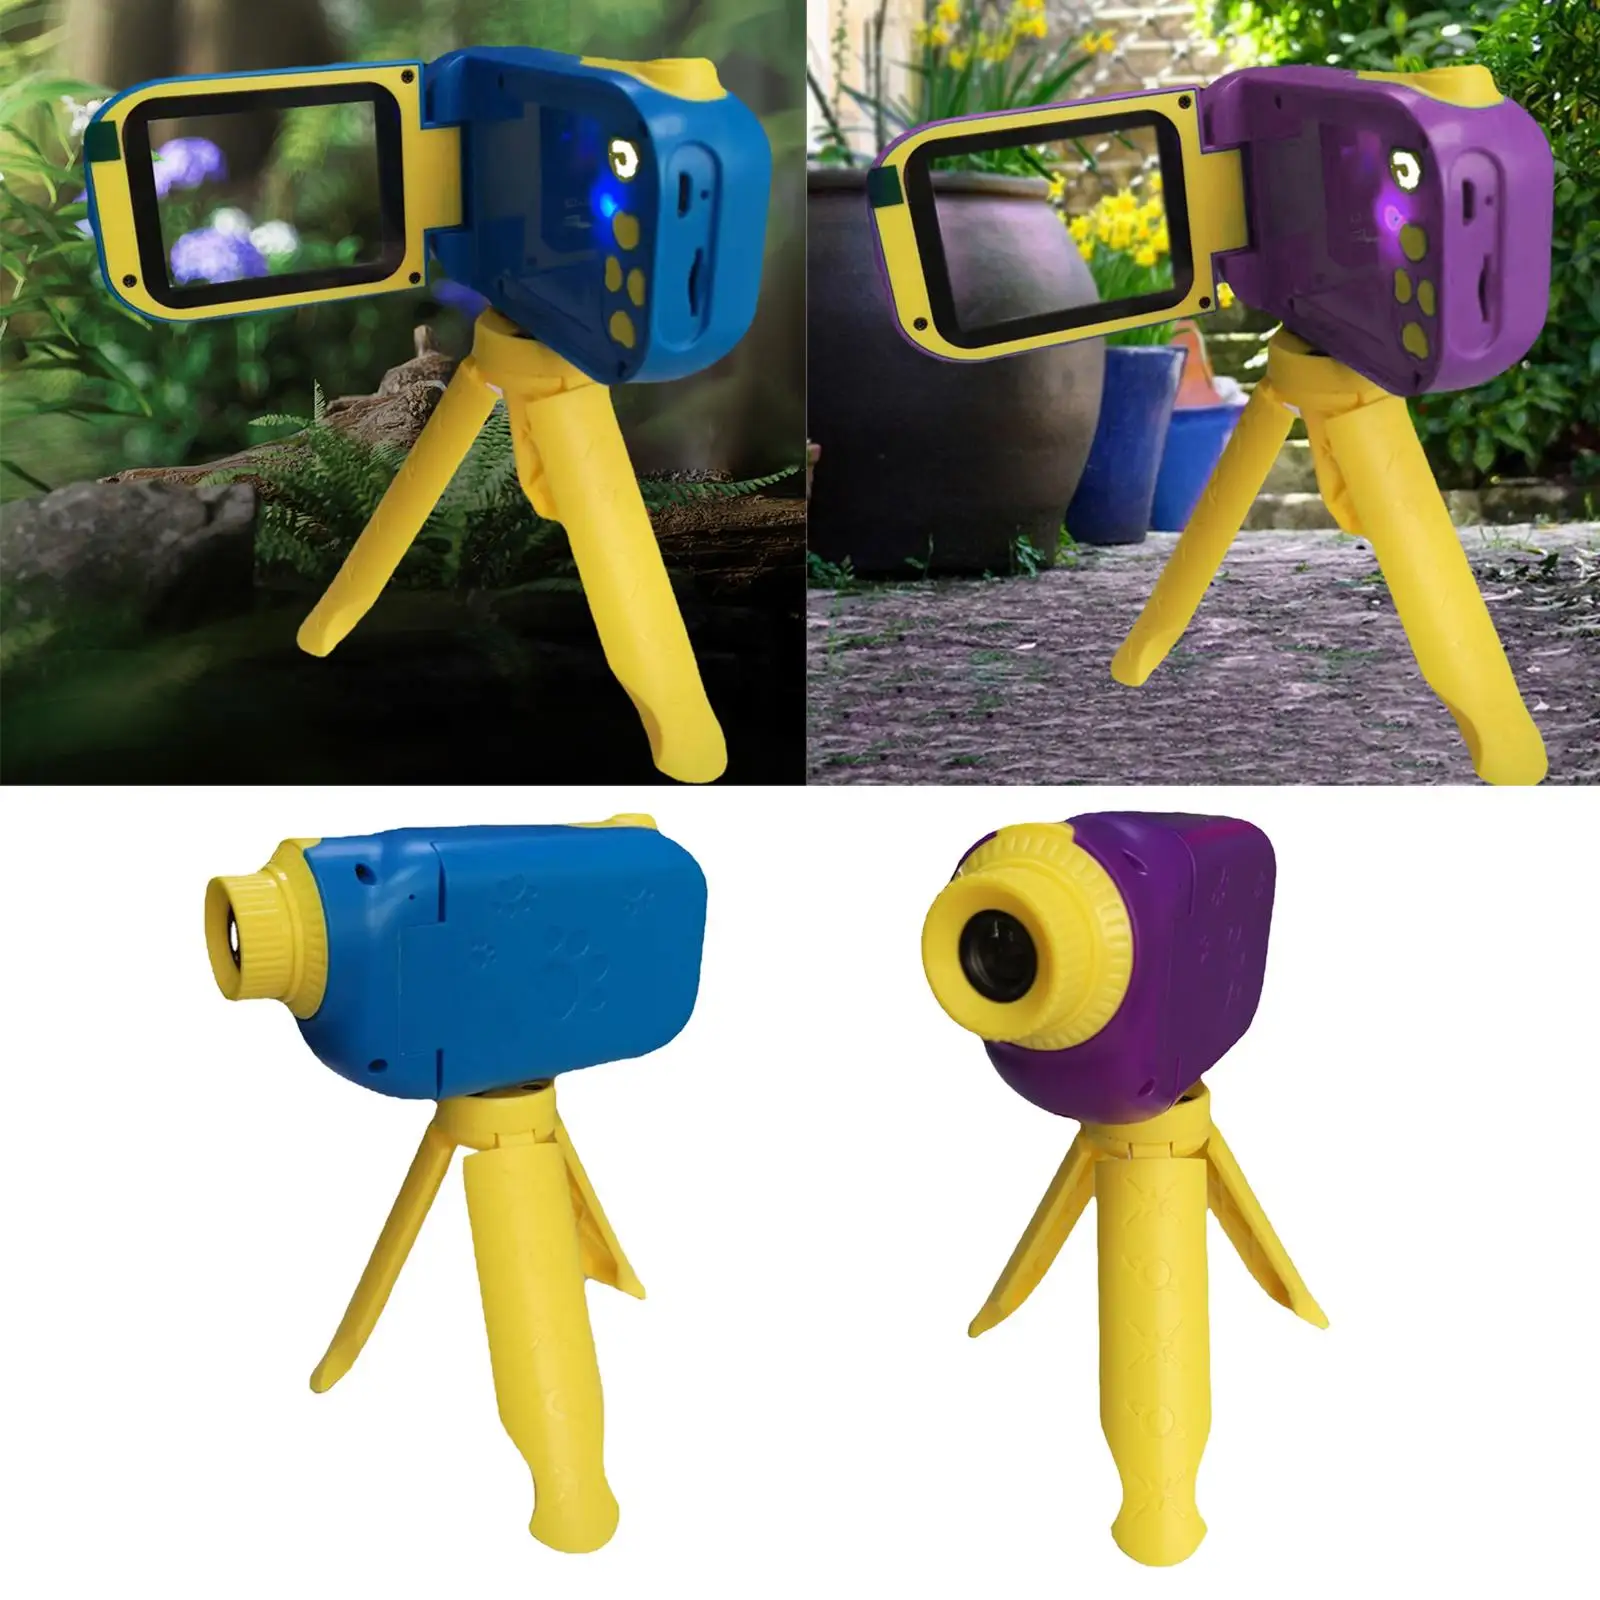 Mini Kids Camera Video Toy 1080P Portable for Girls Boys